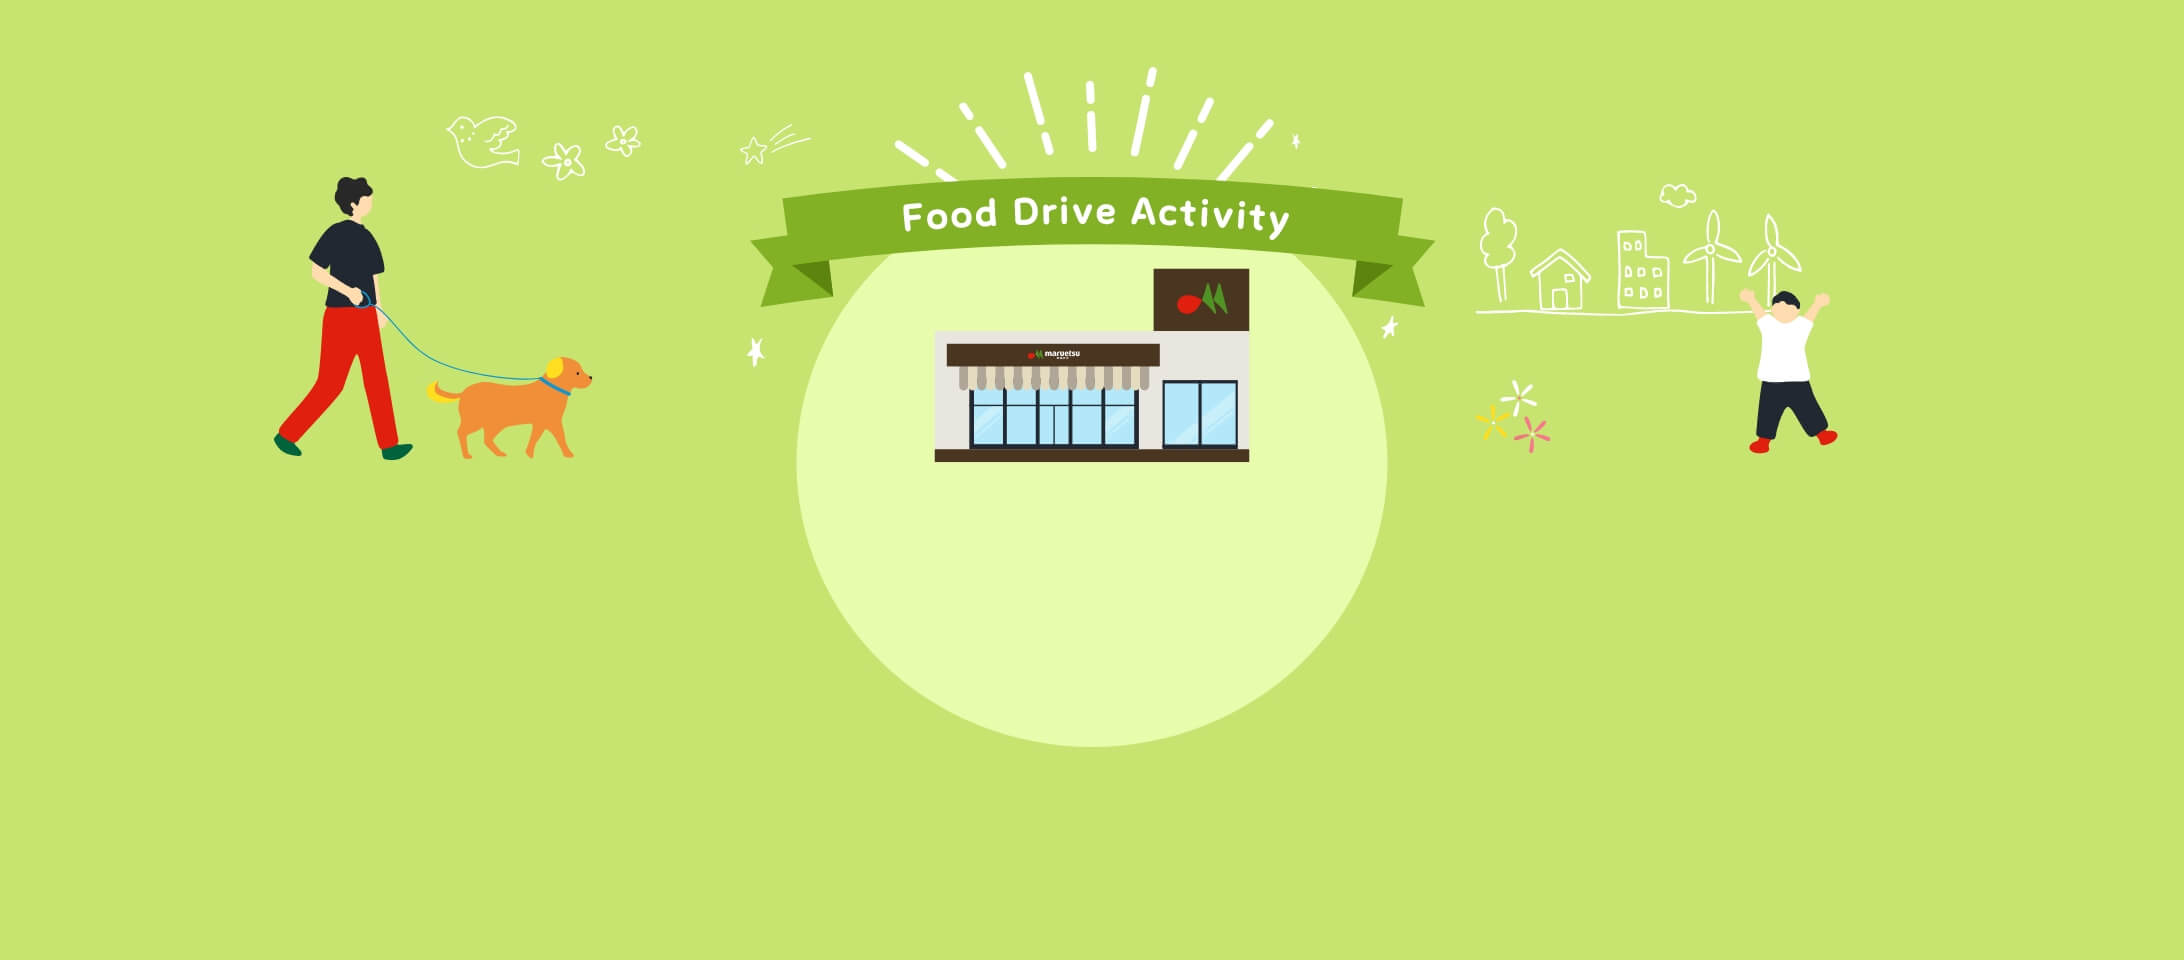 Food Drive Activity